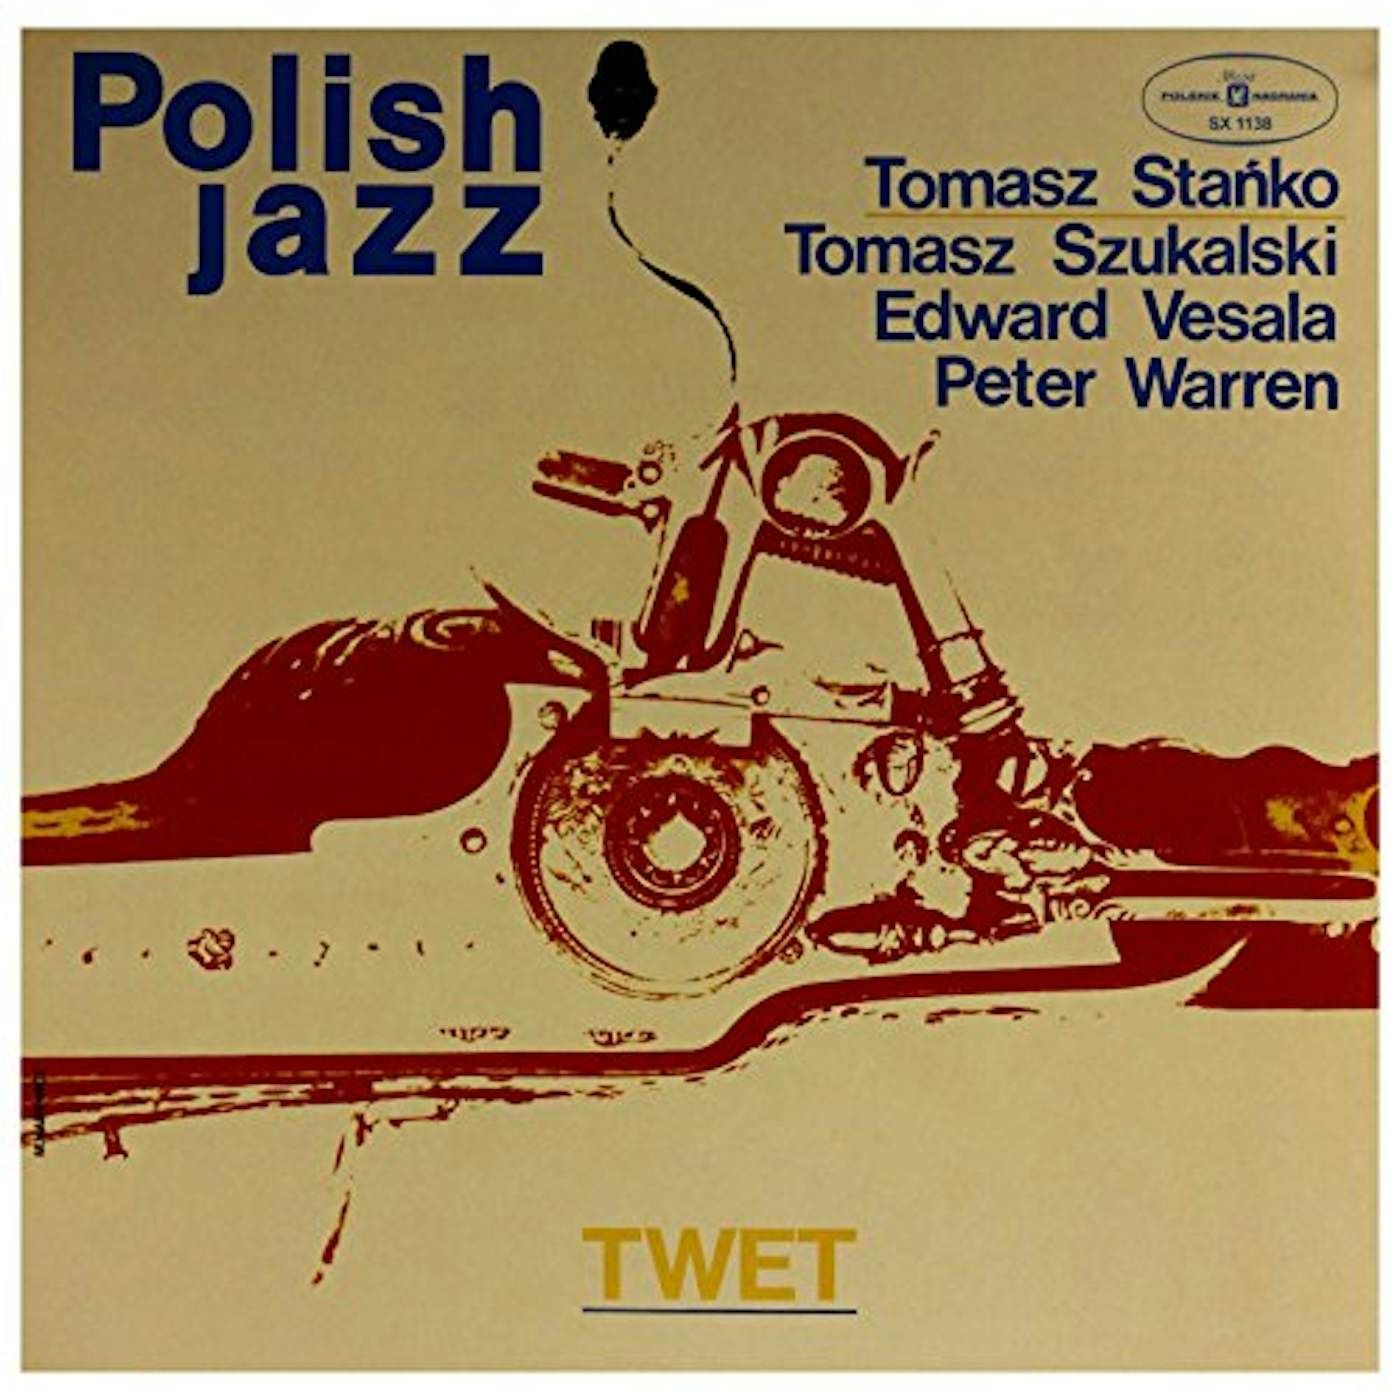 Tomasz Stańko TWET (POLISH JAZZ) Vinyl Record